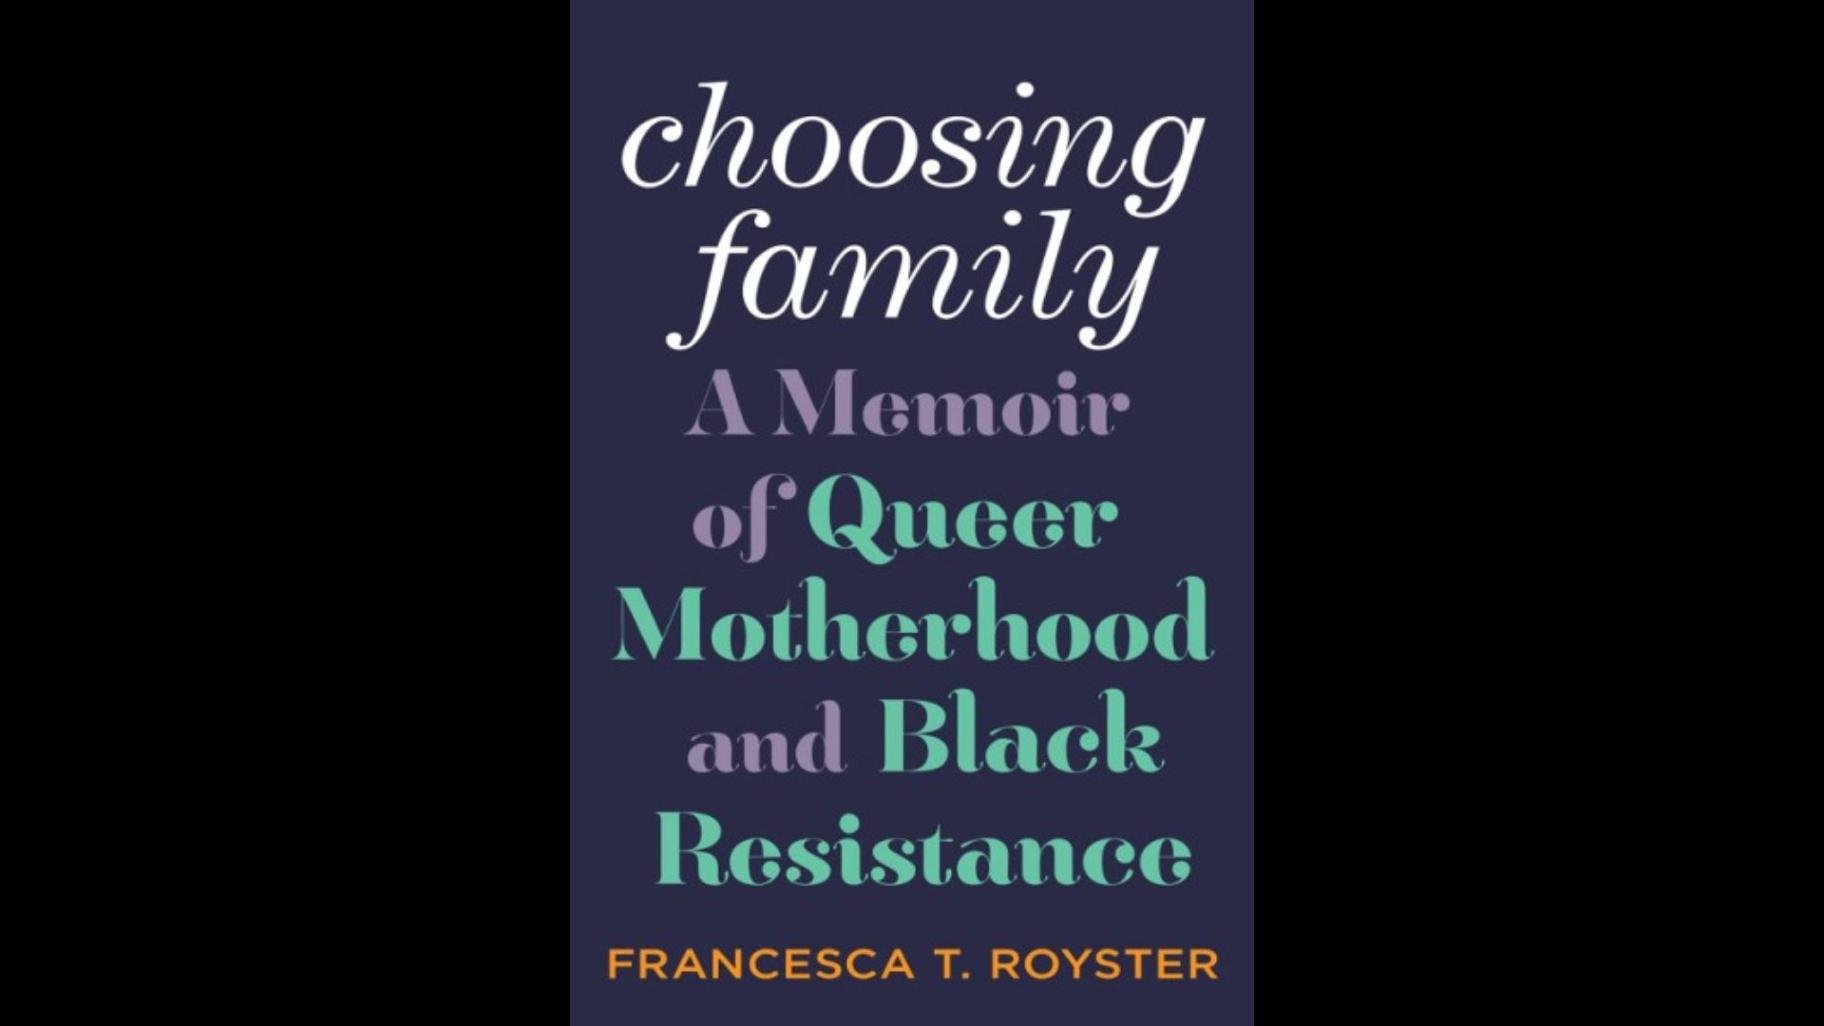 “Choosing Family: A Memoir of Queer Motherhood and Black Resistance” by Francesca T. Royster.